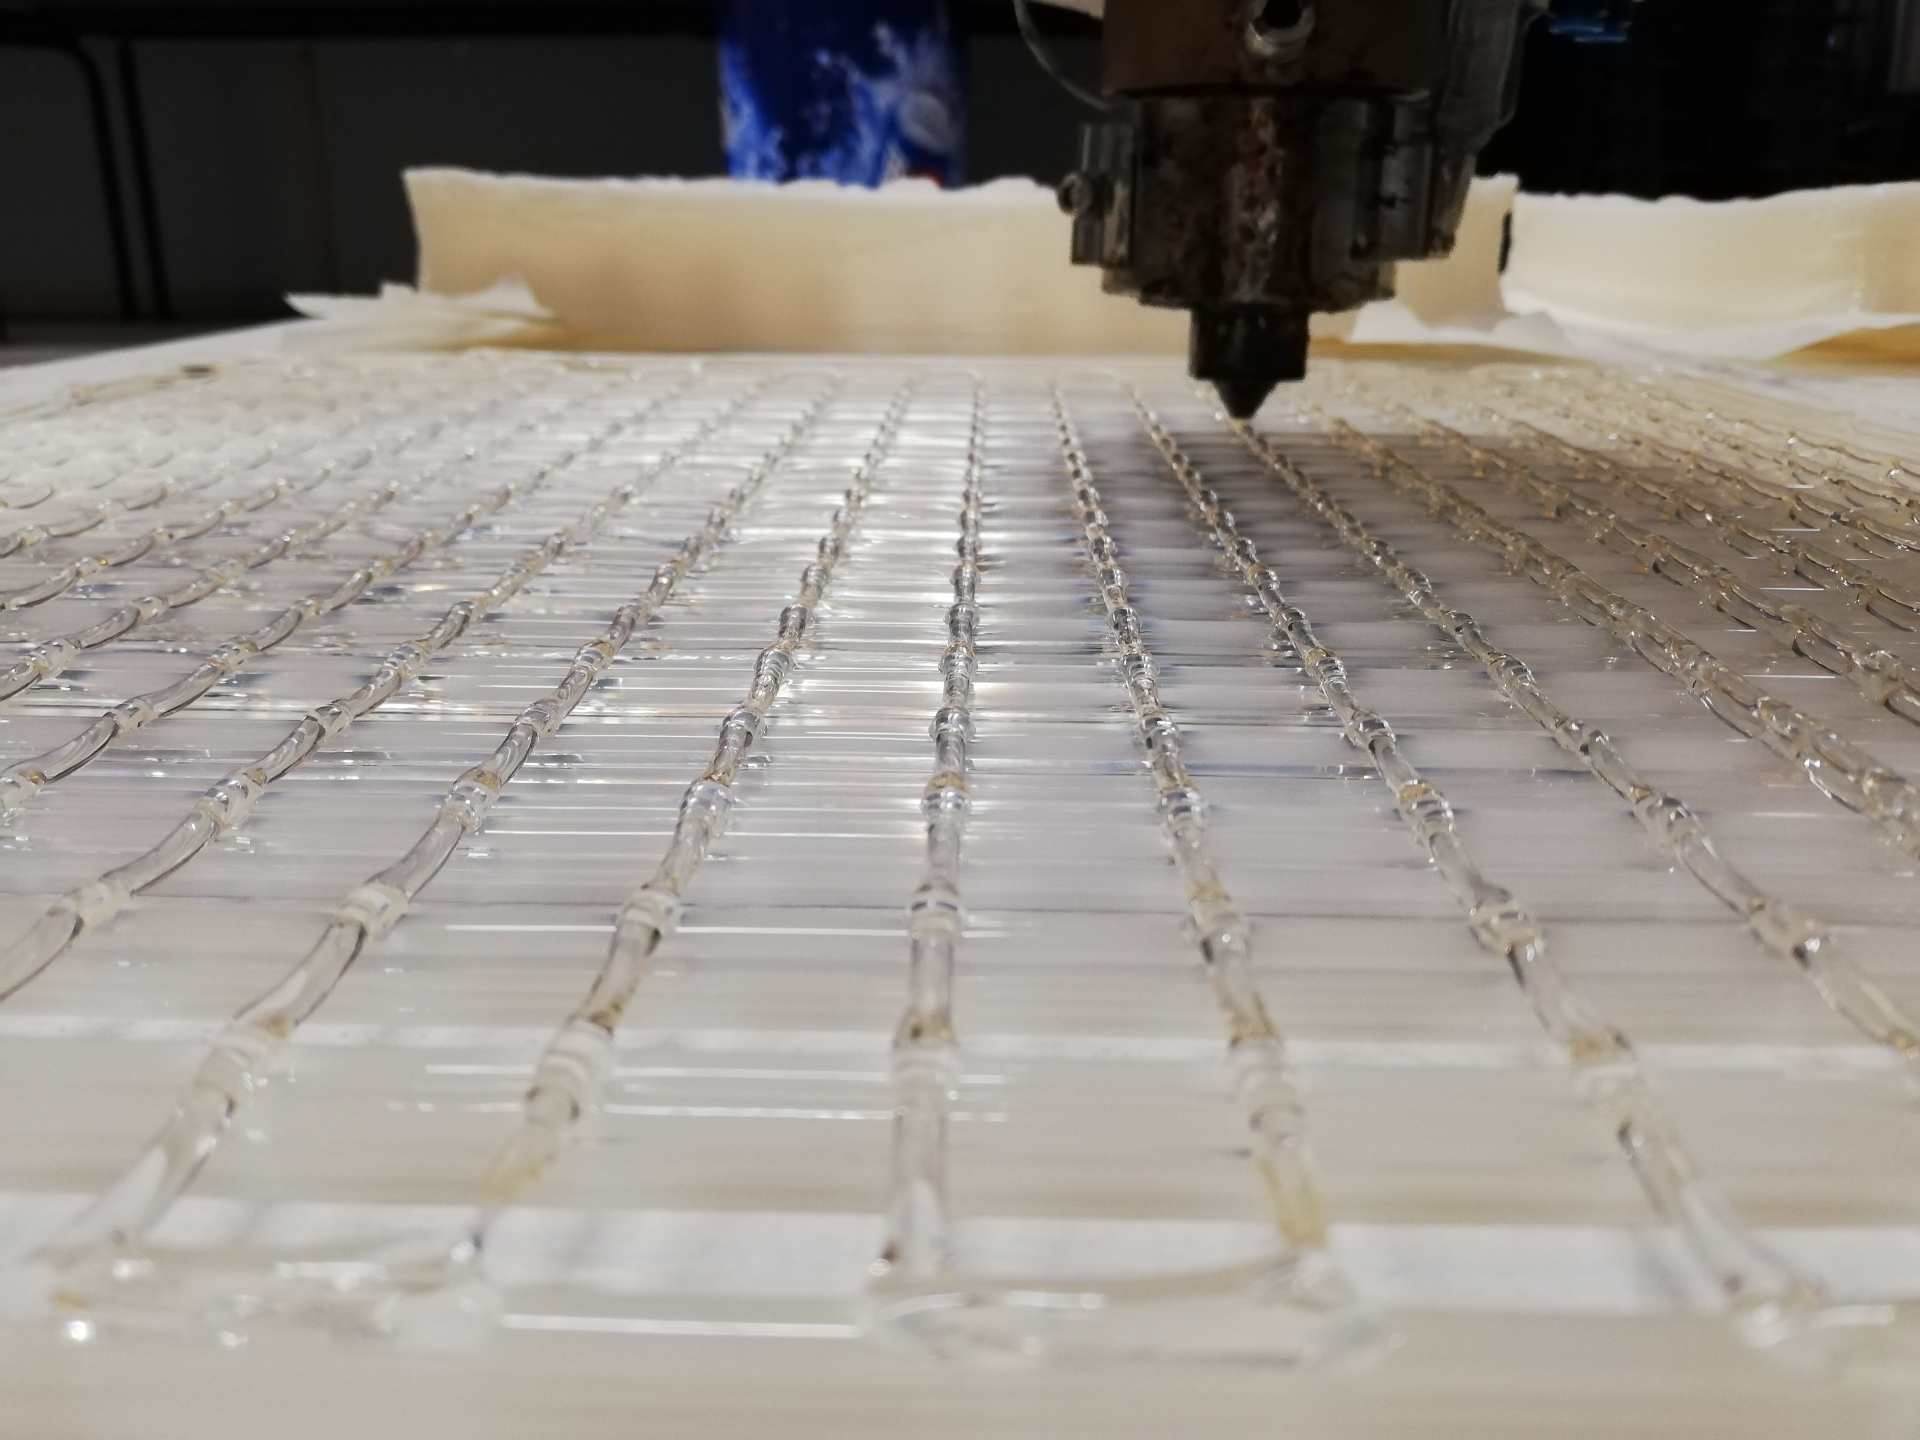 Industrial 3D printer prints biodegradable structures. Photo: R.J.M. Temmink 